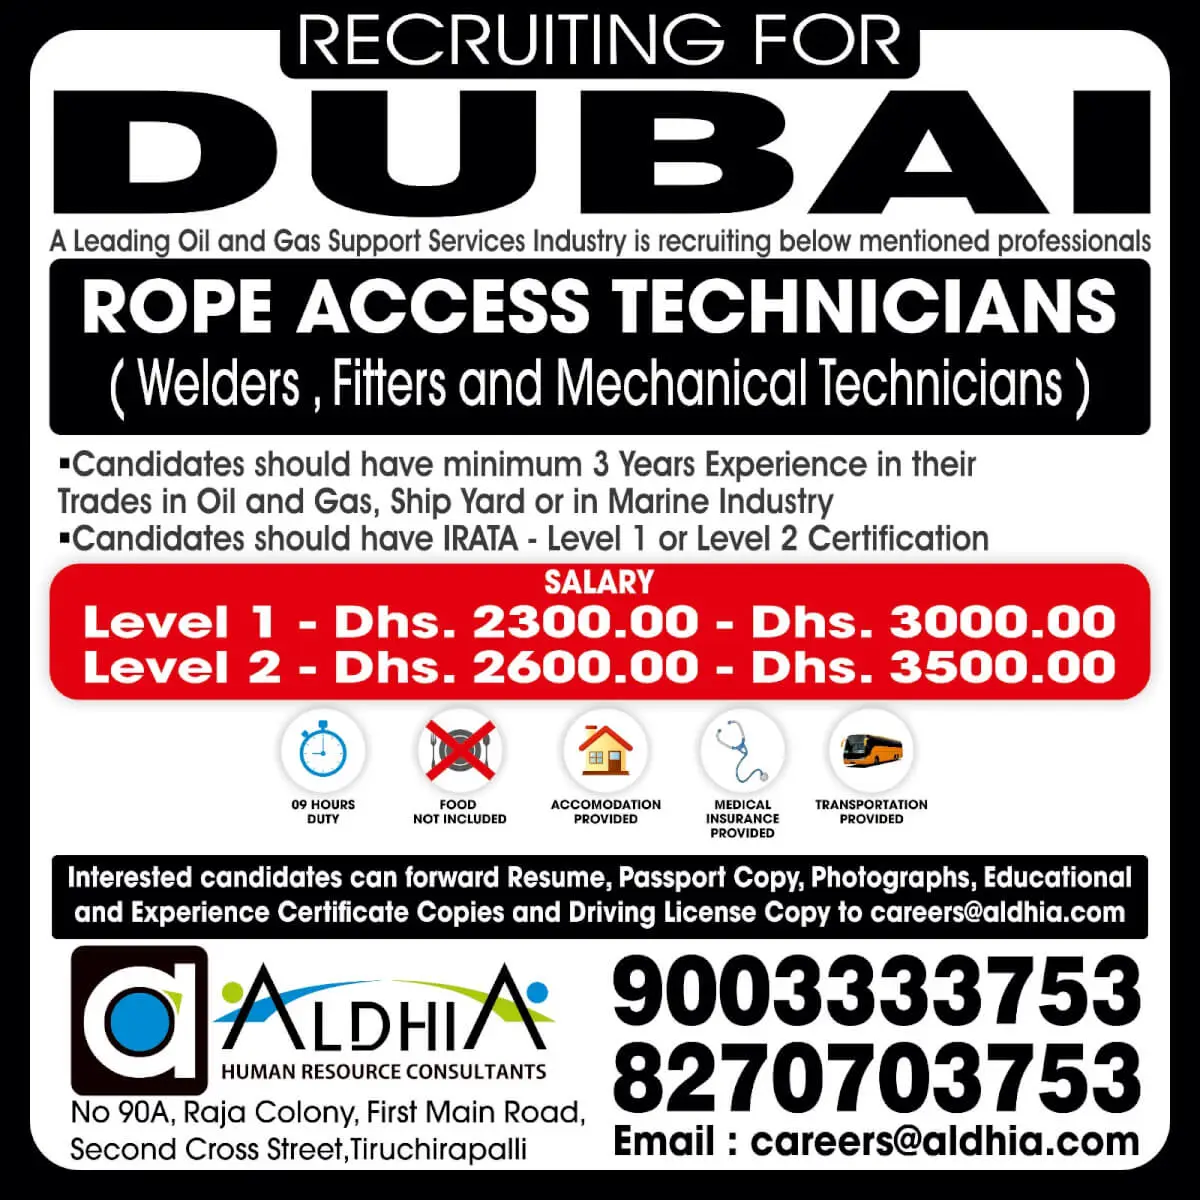 Dubai 365 – Rope Access Technicians Jobs in Dubai